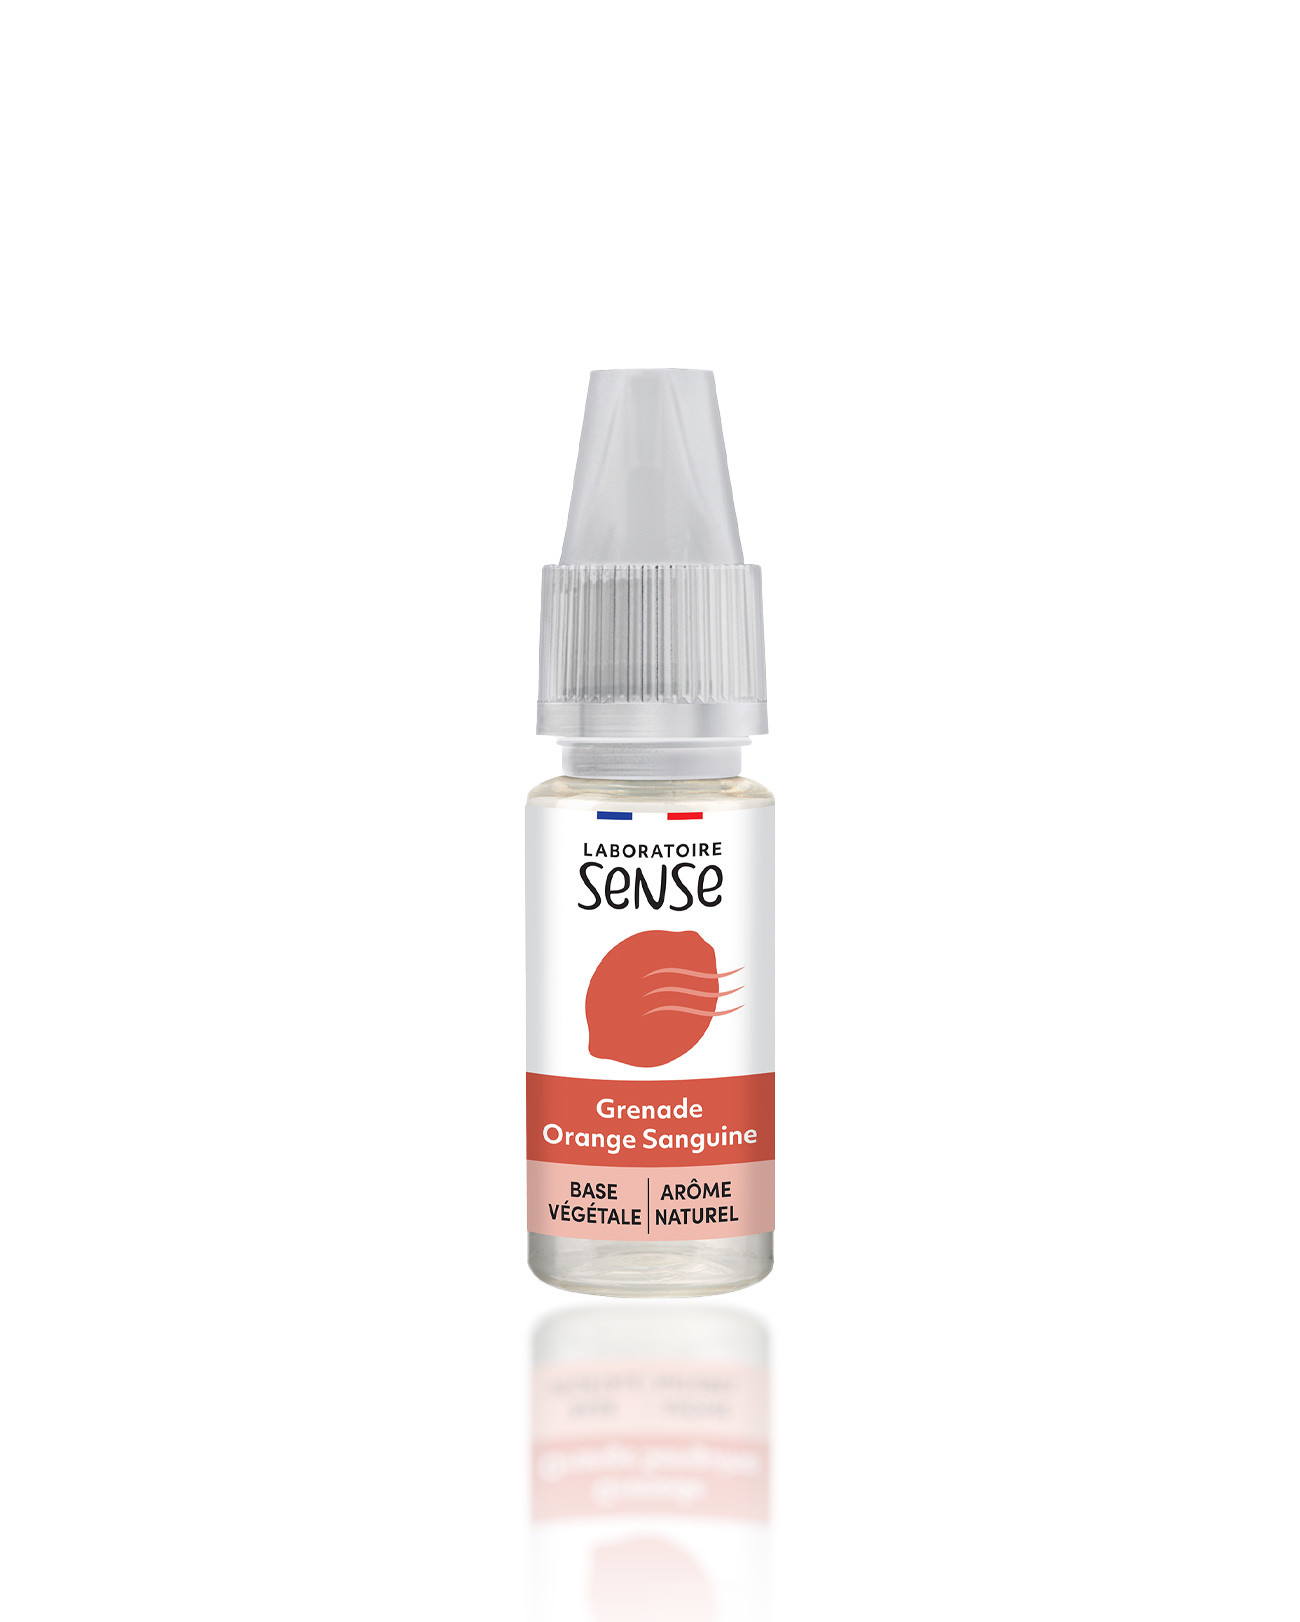 E-liquide 10 ml Grenade Orange Sanguine Laboratoire Sense nouveau packaging